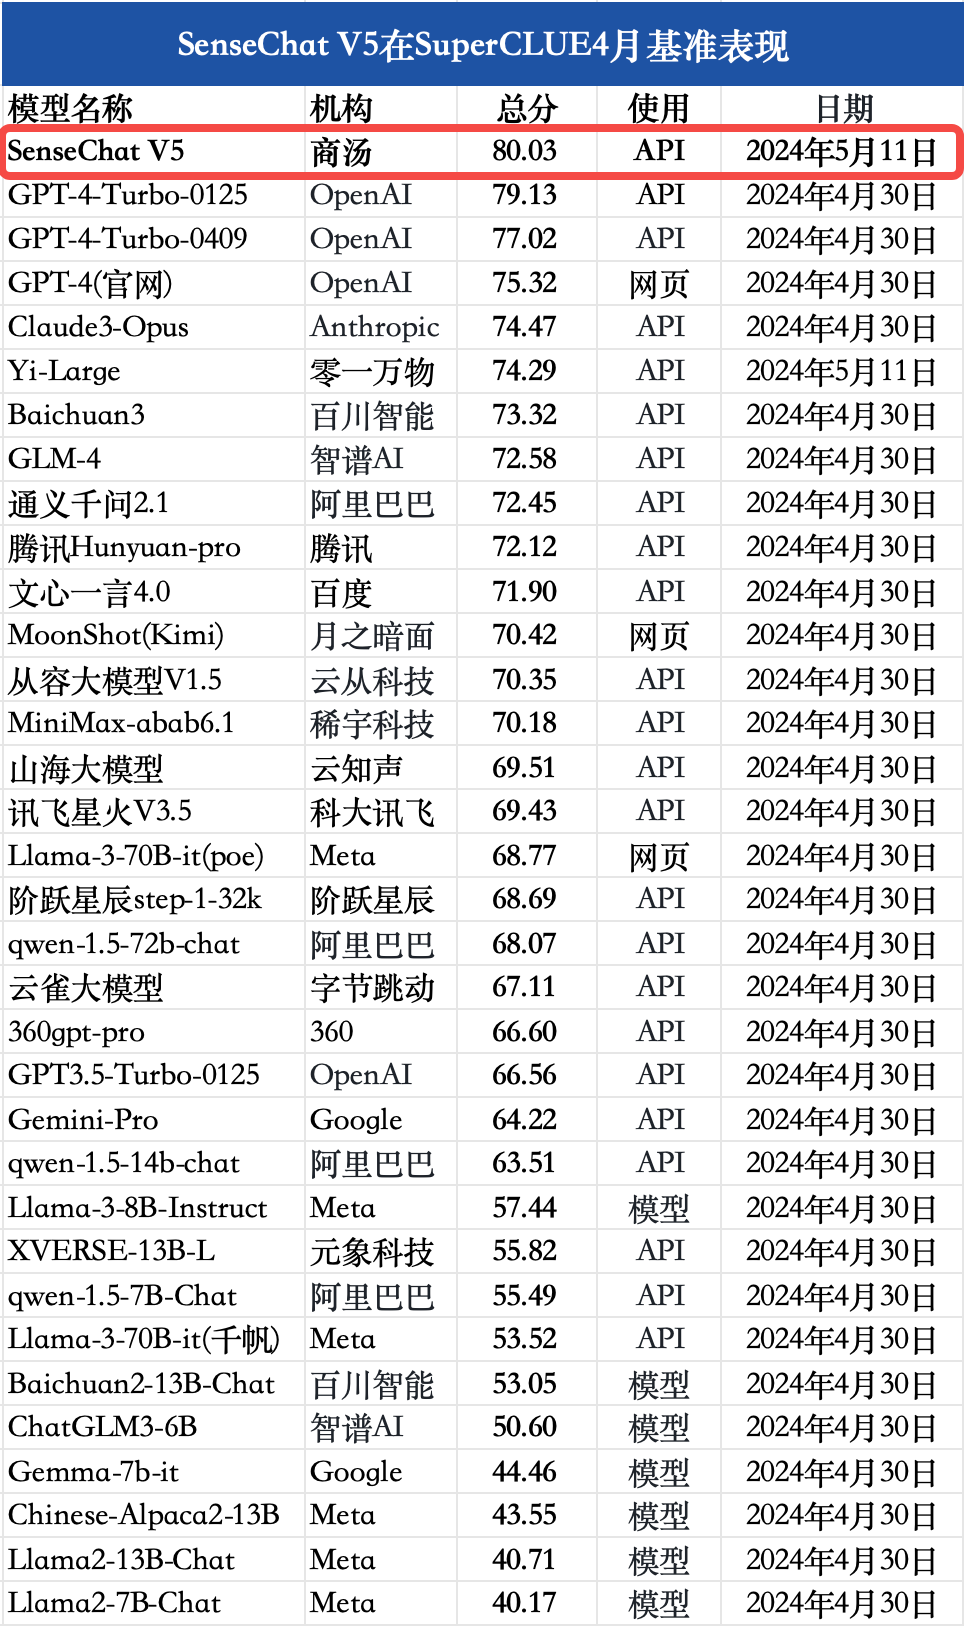 SuperCLUE测评发布，商汤“日日新5.0”中文综合成绩超越GPT-4 Turbo，国泰君安给予“增持”股票评级